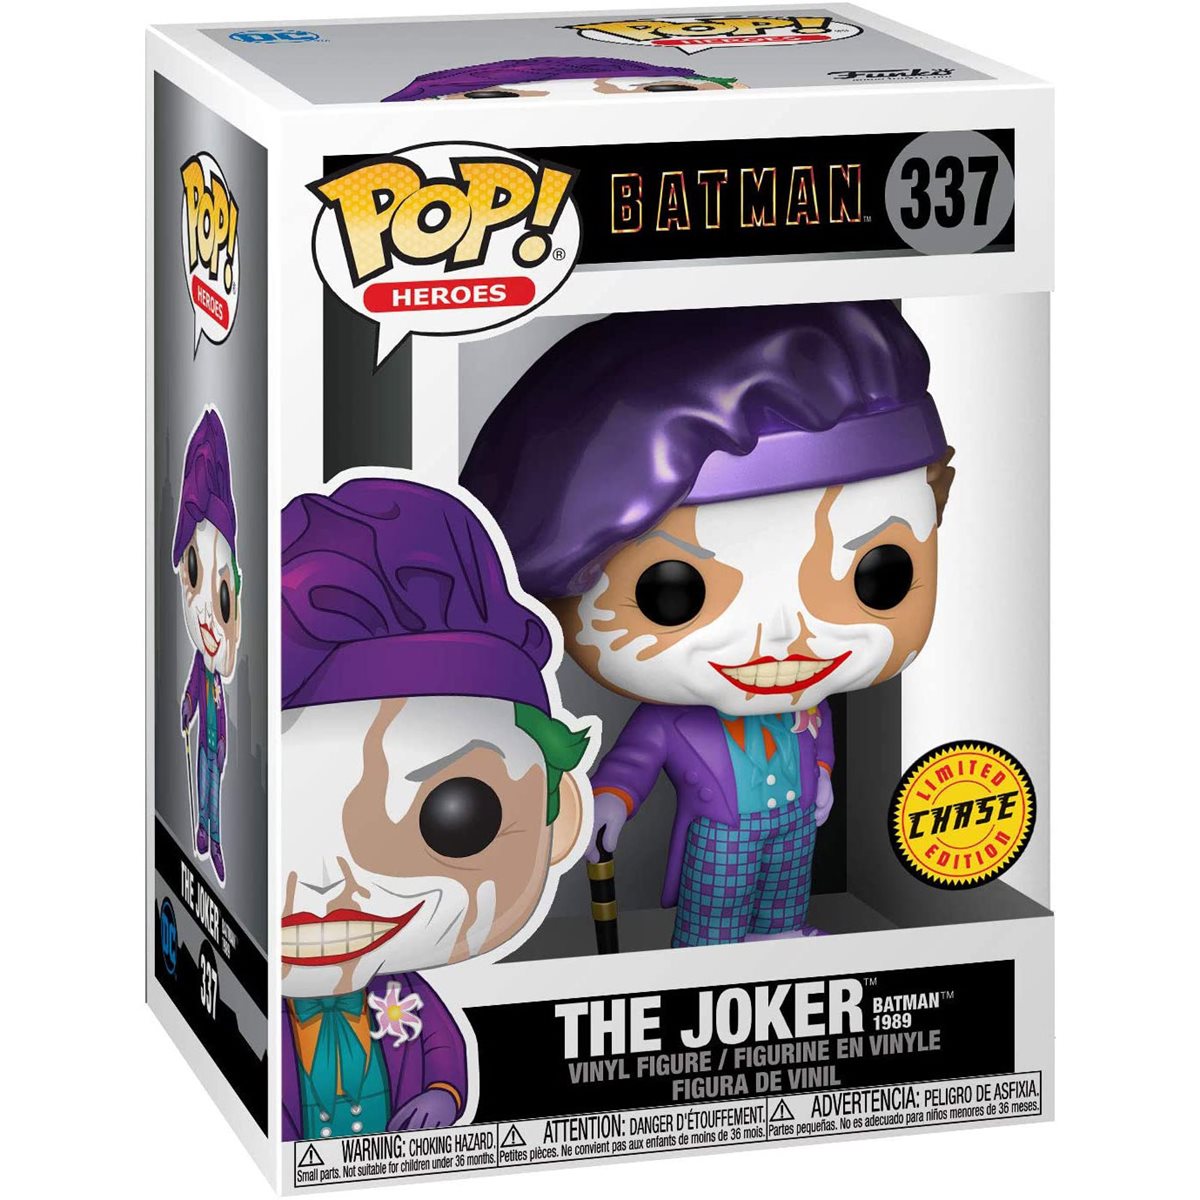 The Joker 337 Chase - Funko Pop! Heroes